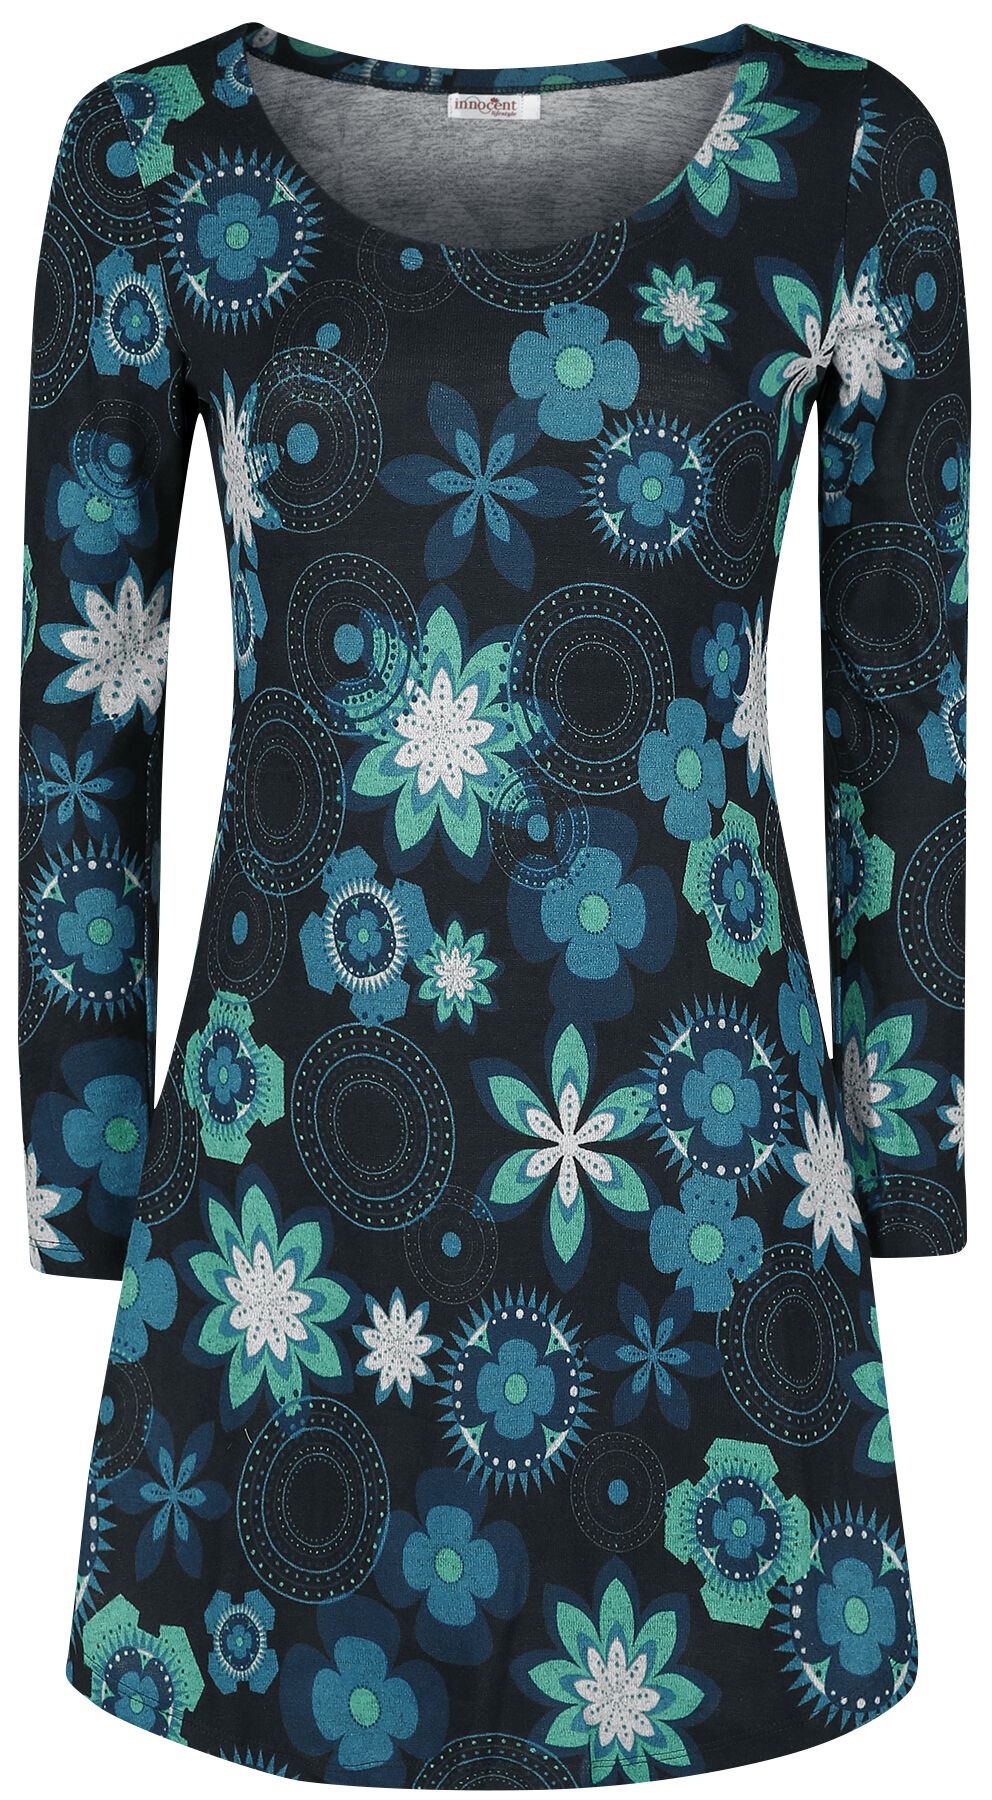 Image of Miniabito di Innocent - Flower Rounds Winter Dress - S a XL - Donna - nero